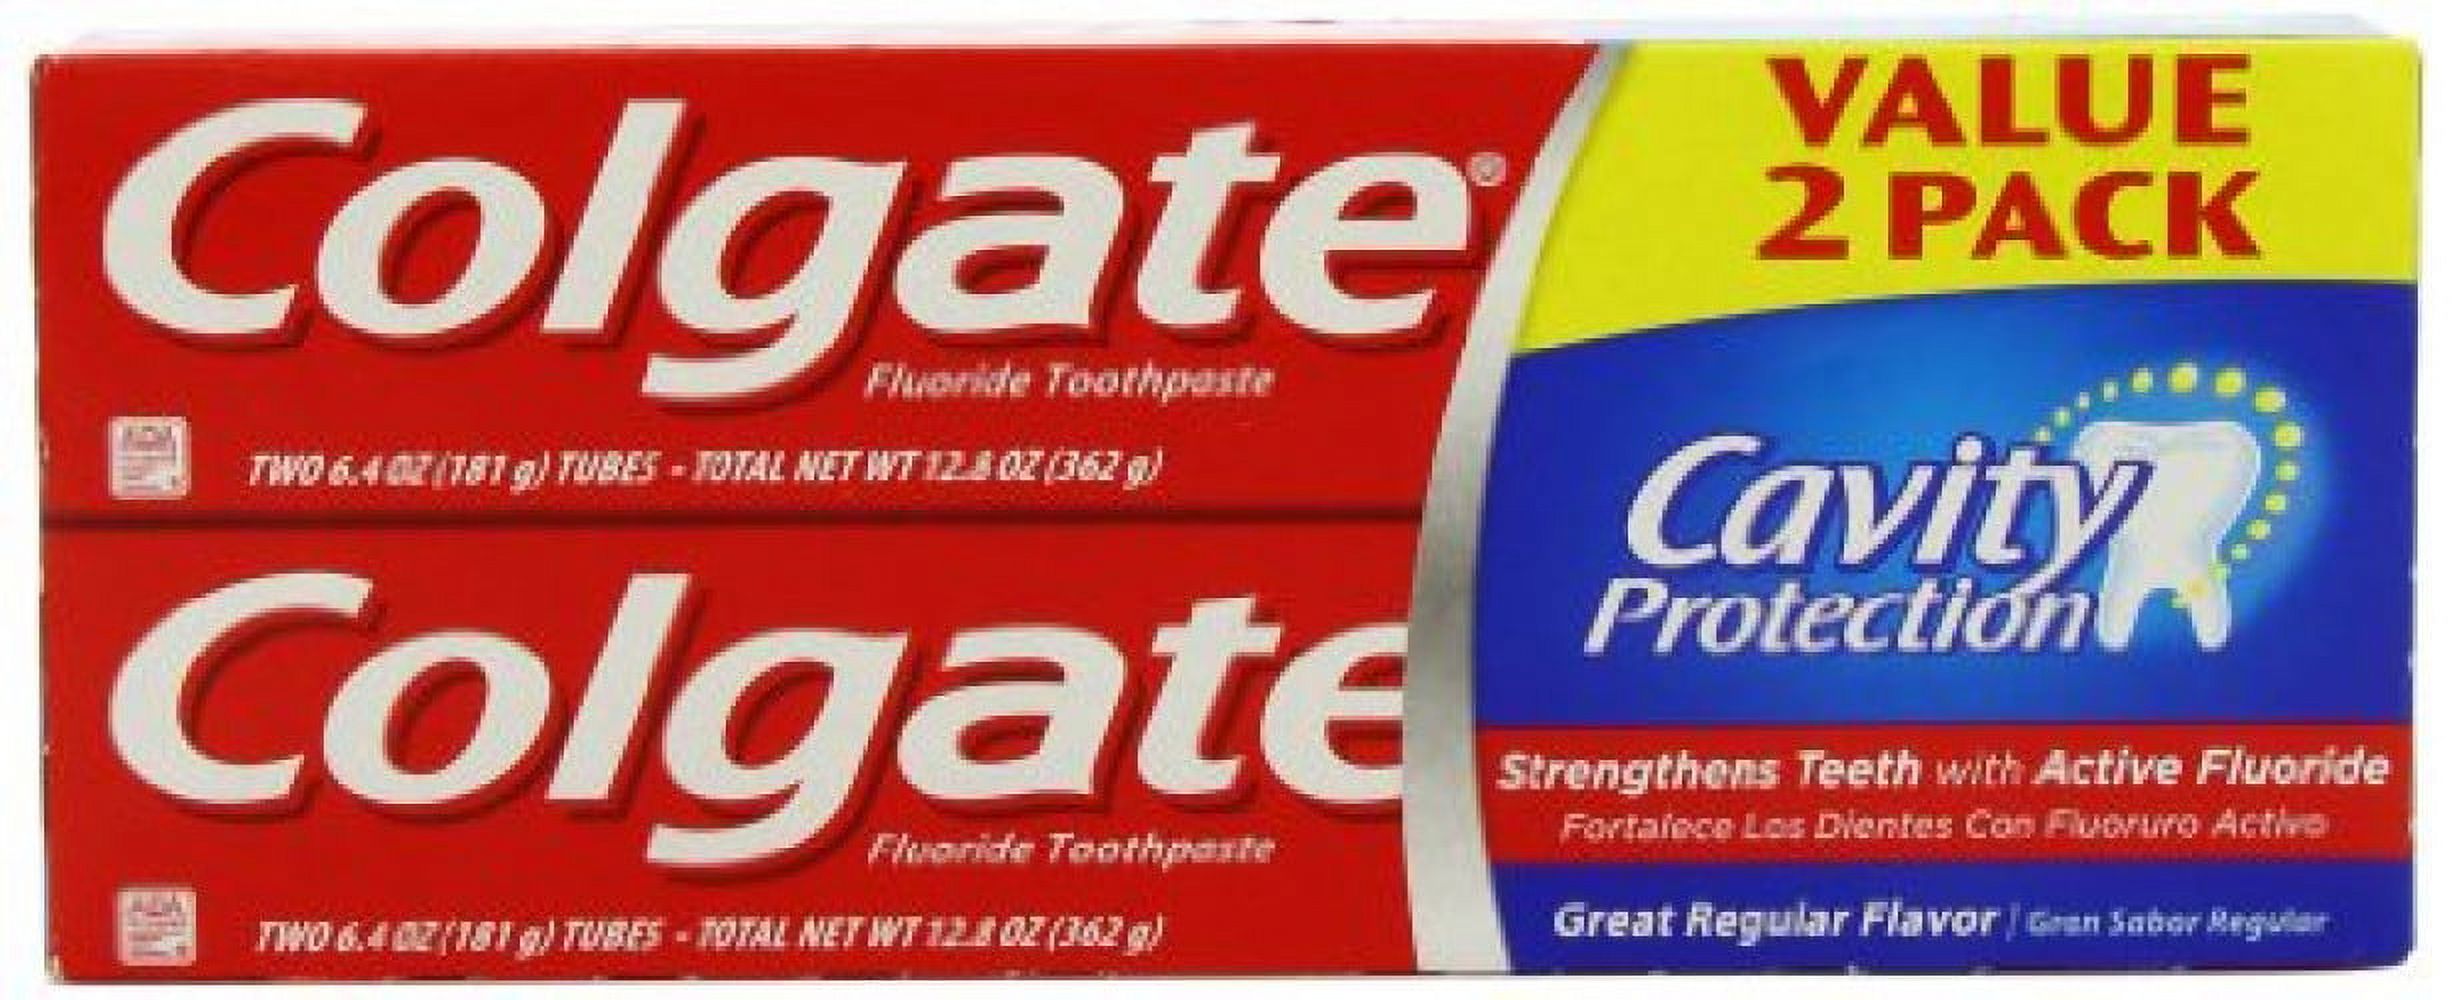 Colgate Cavity Toothpaste 2pk - image 4 of 7